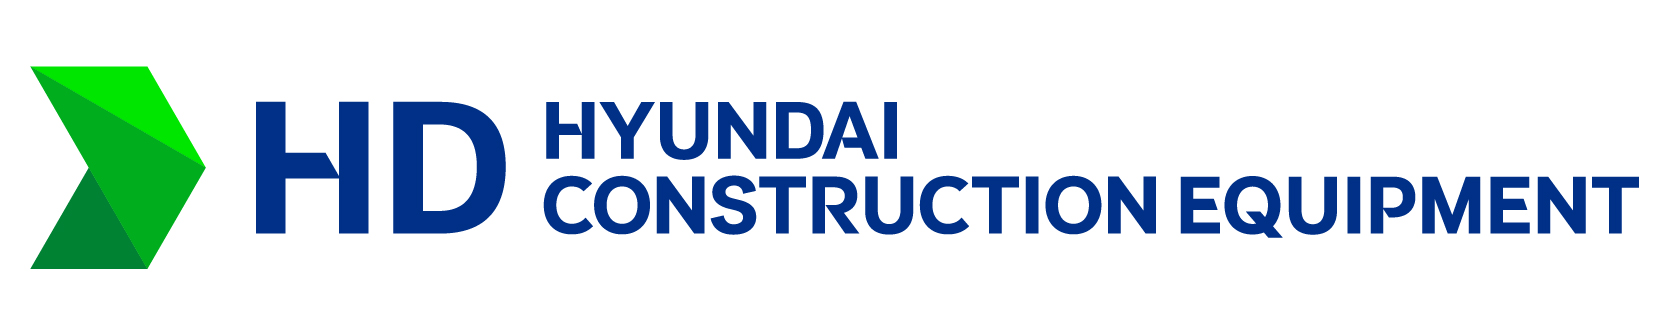 HD Hyundai Construction Equipment Europe